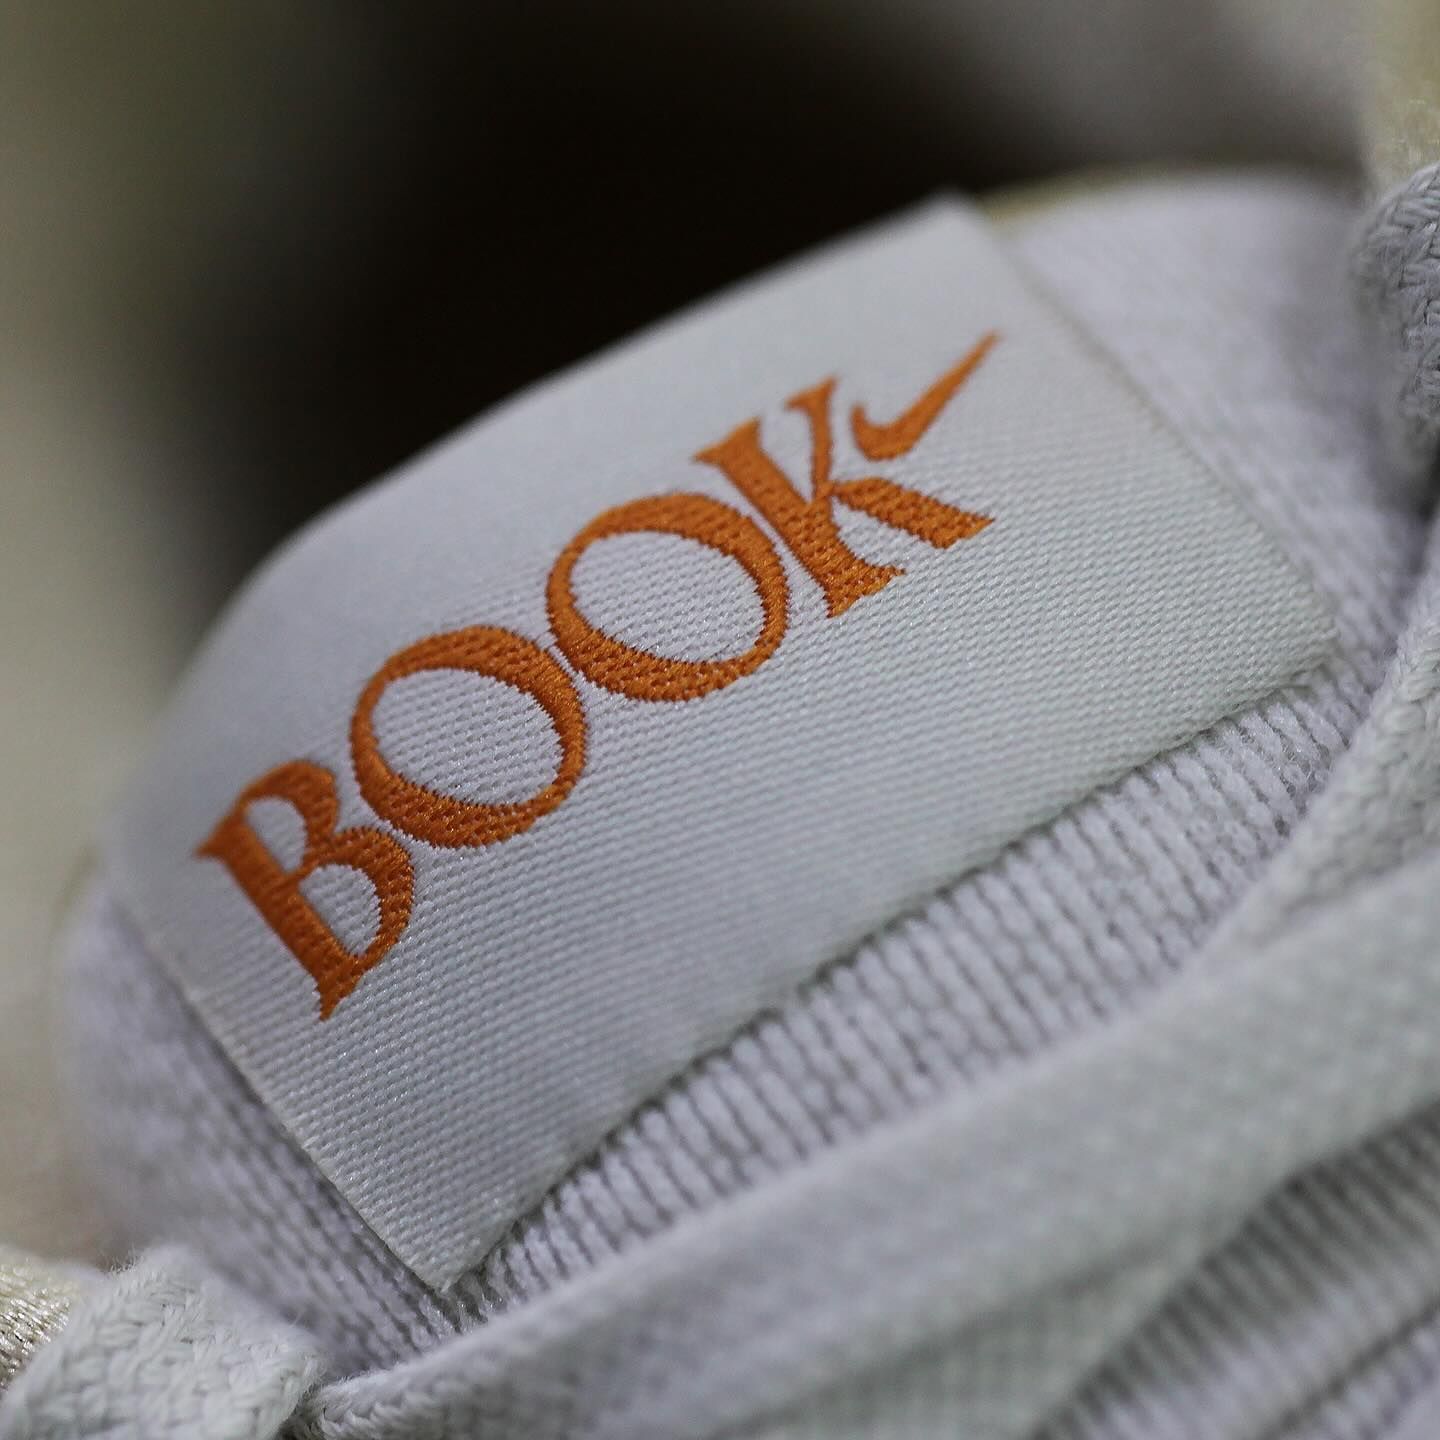 Nike Book 1 Light Orewood Brown  FJ4249-100 Release Info